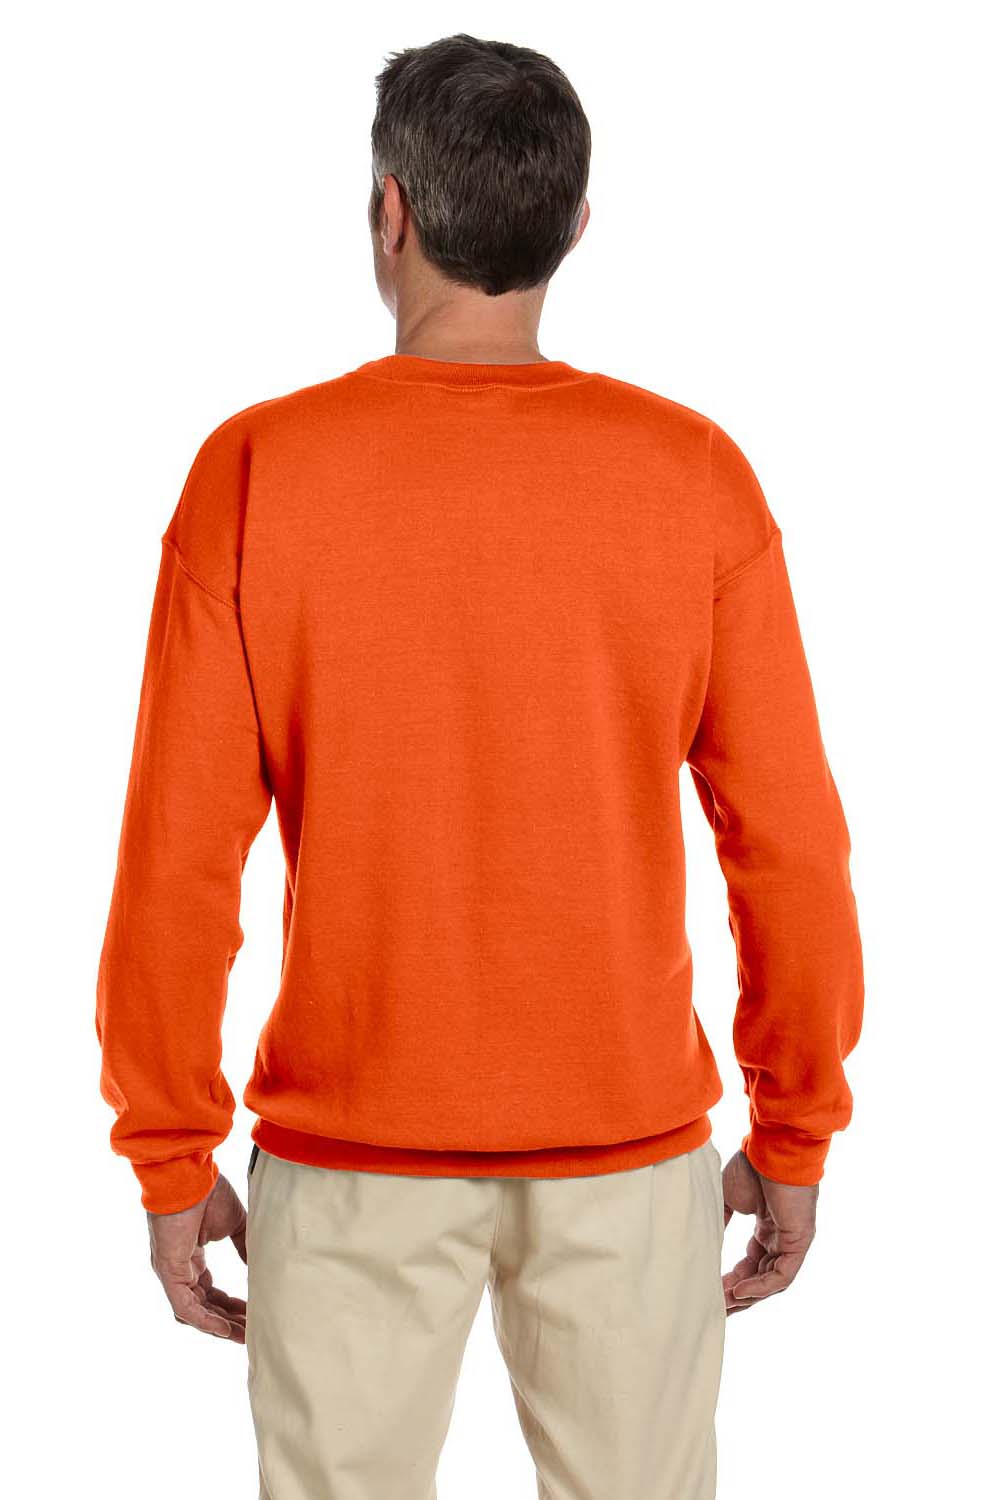 Jerzees 4662 Mens Super Sweats NuBlend Fleece Crewneck Sweatshirt Safety Orange Back